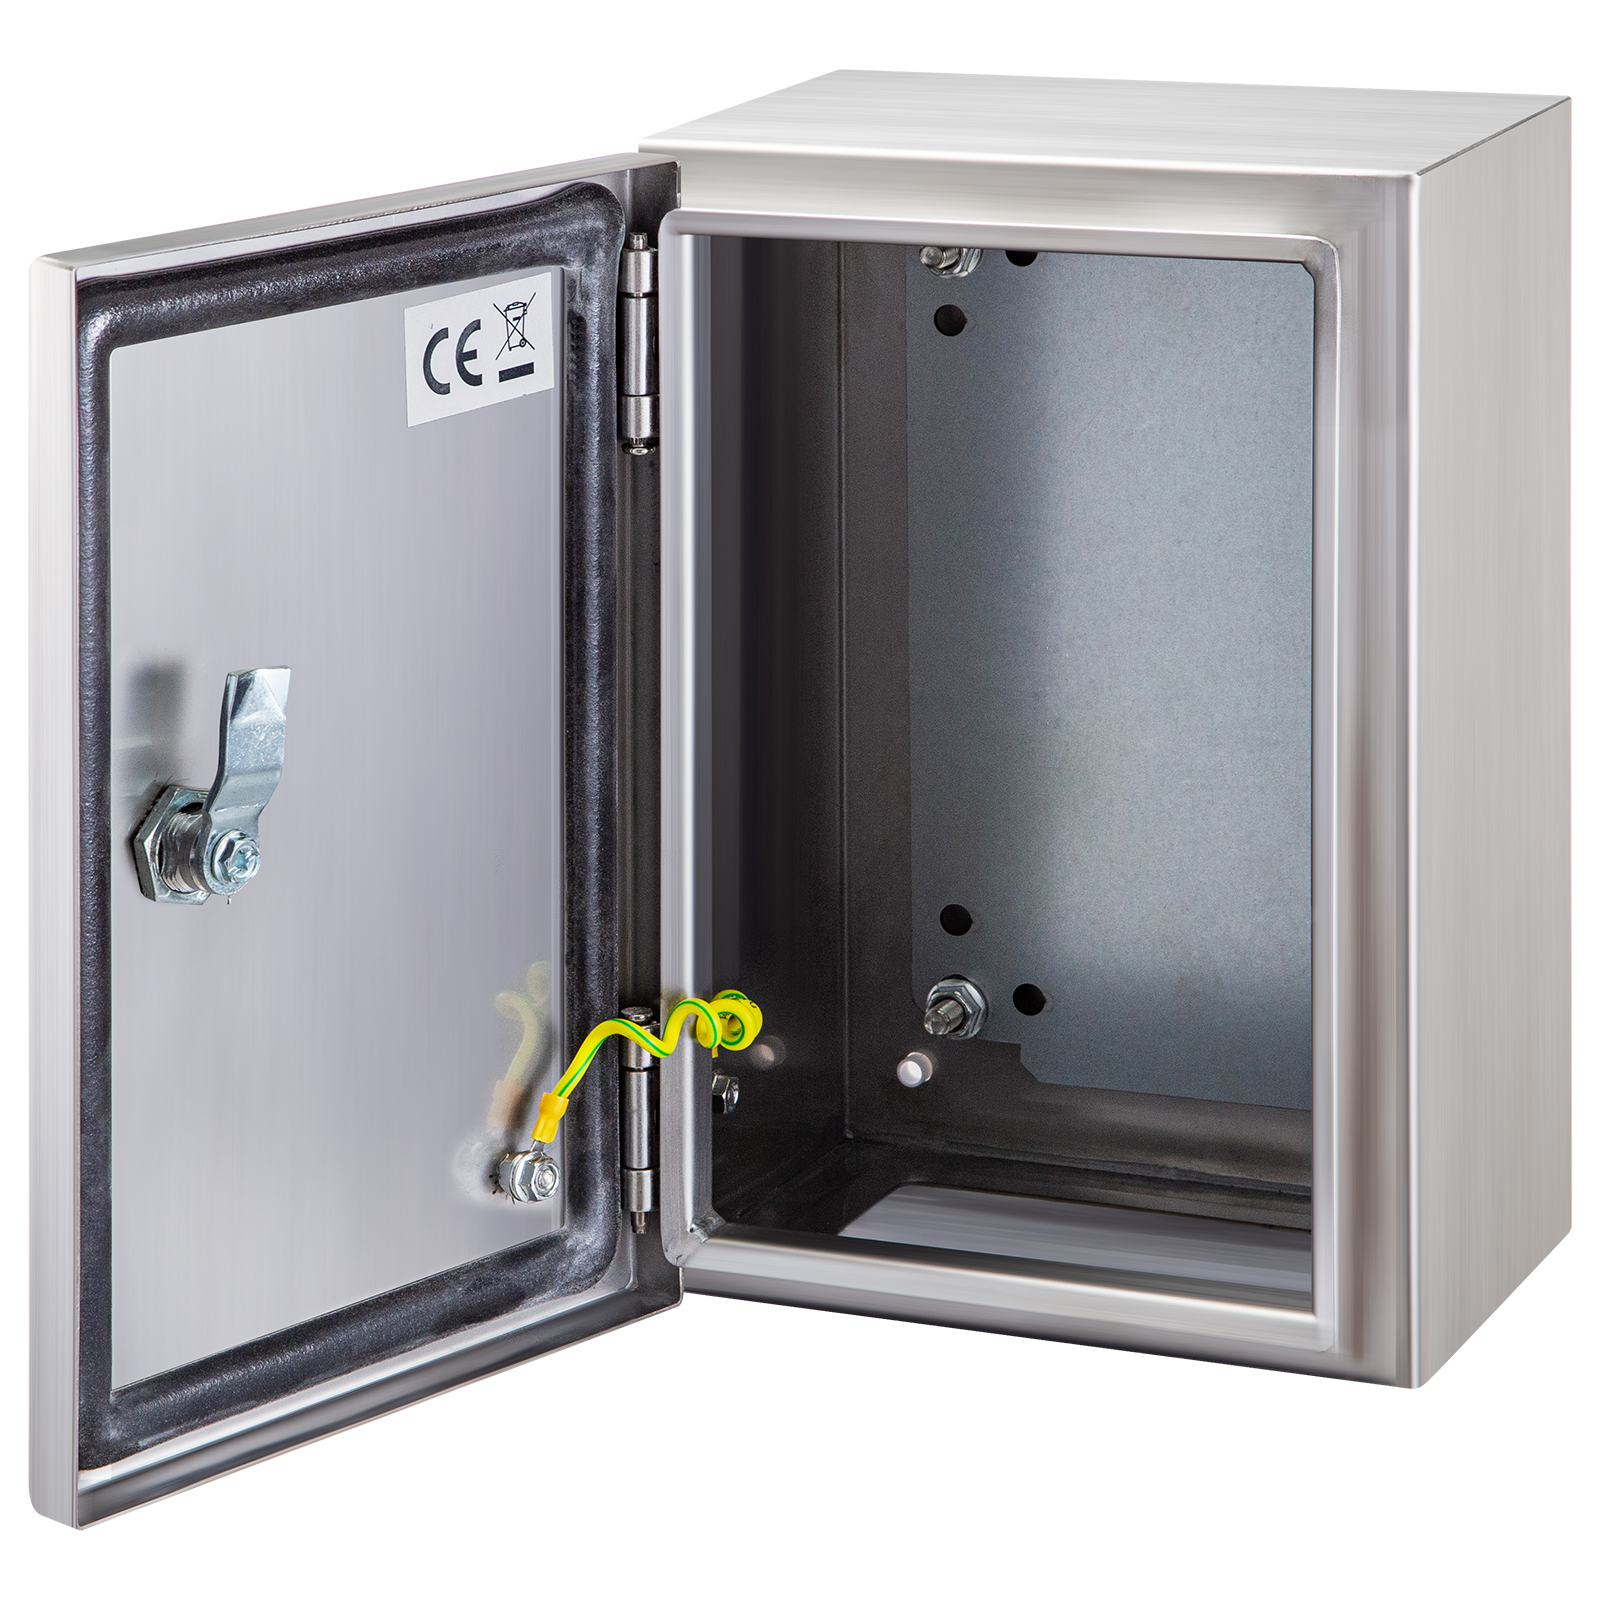 Electrical Enclosure Box--Begin your security setups!